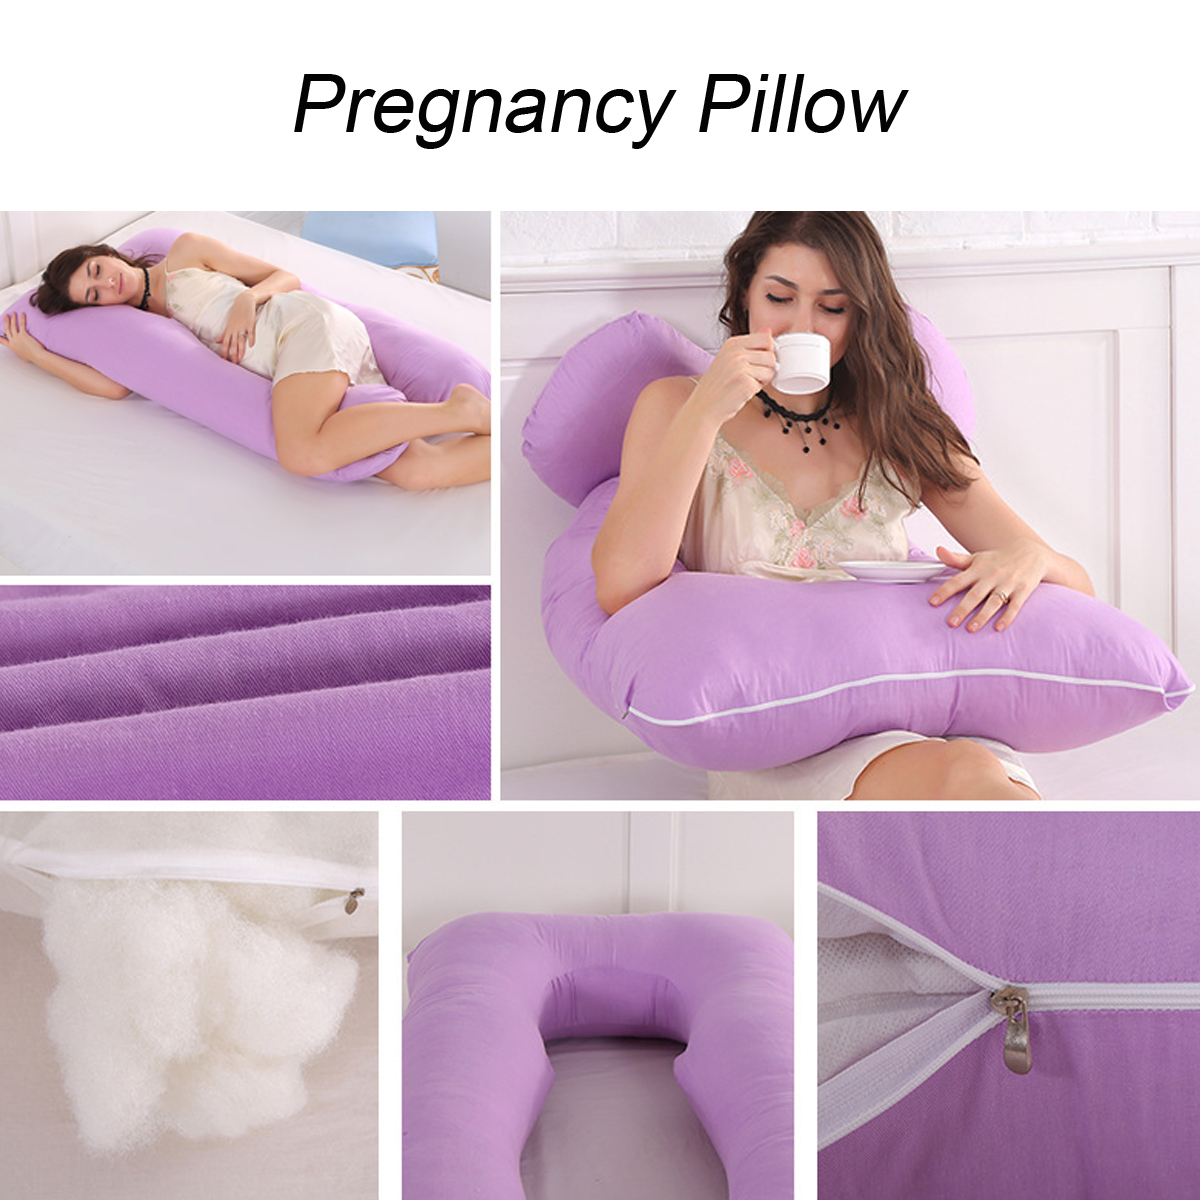 Family-Maternity-Pillow-Pregnancy-Nursing-Sleeping-Body-Support-Feeding-Cofortable-1259436-3